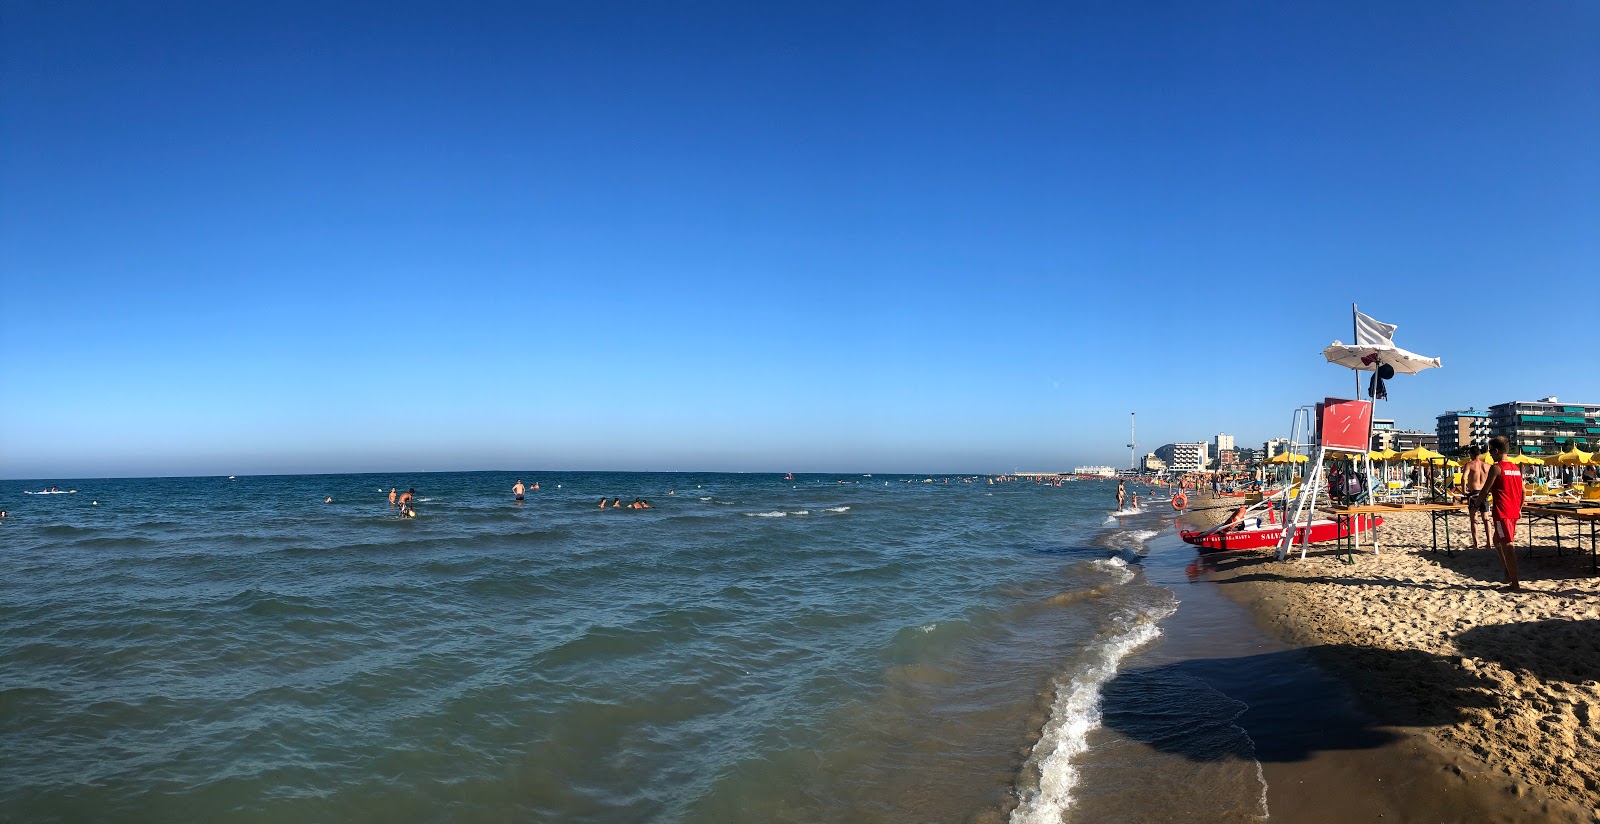 Fotografie cu Pesaro beach II cu nivelul de curățenie in medie